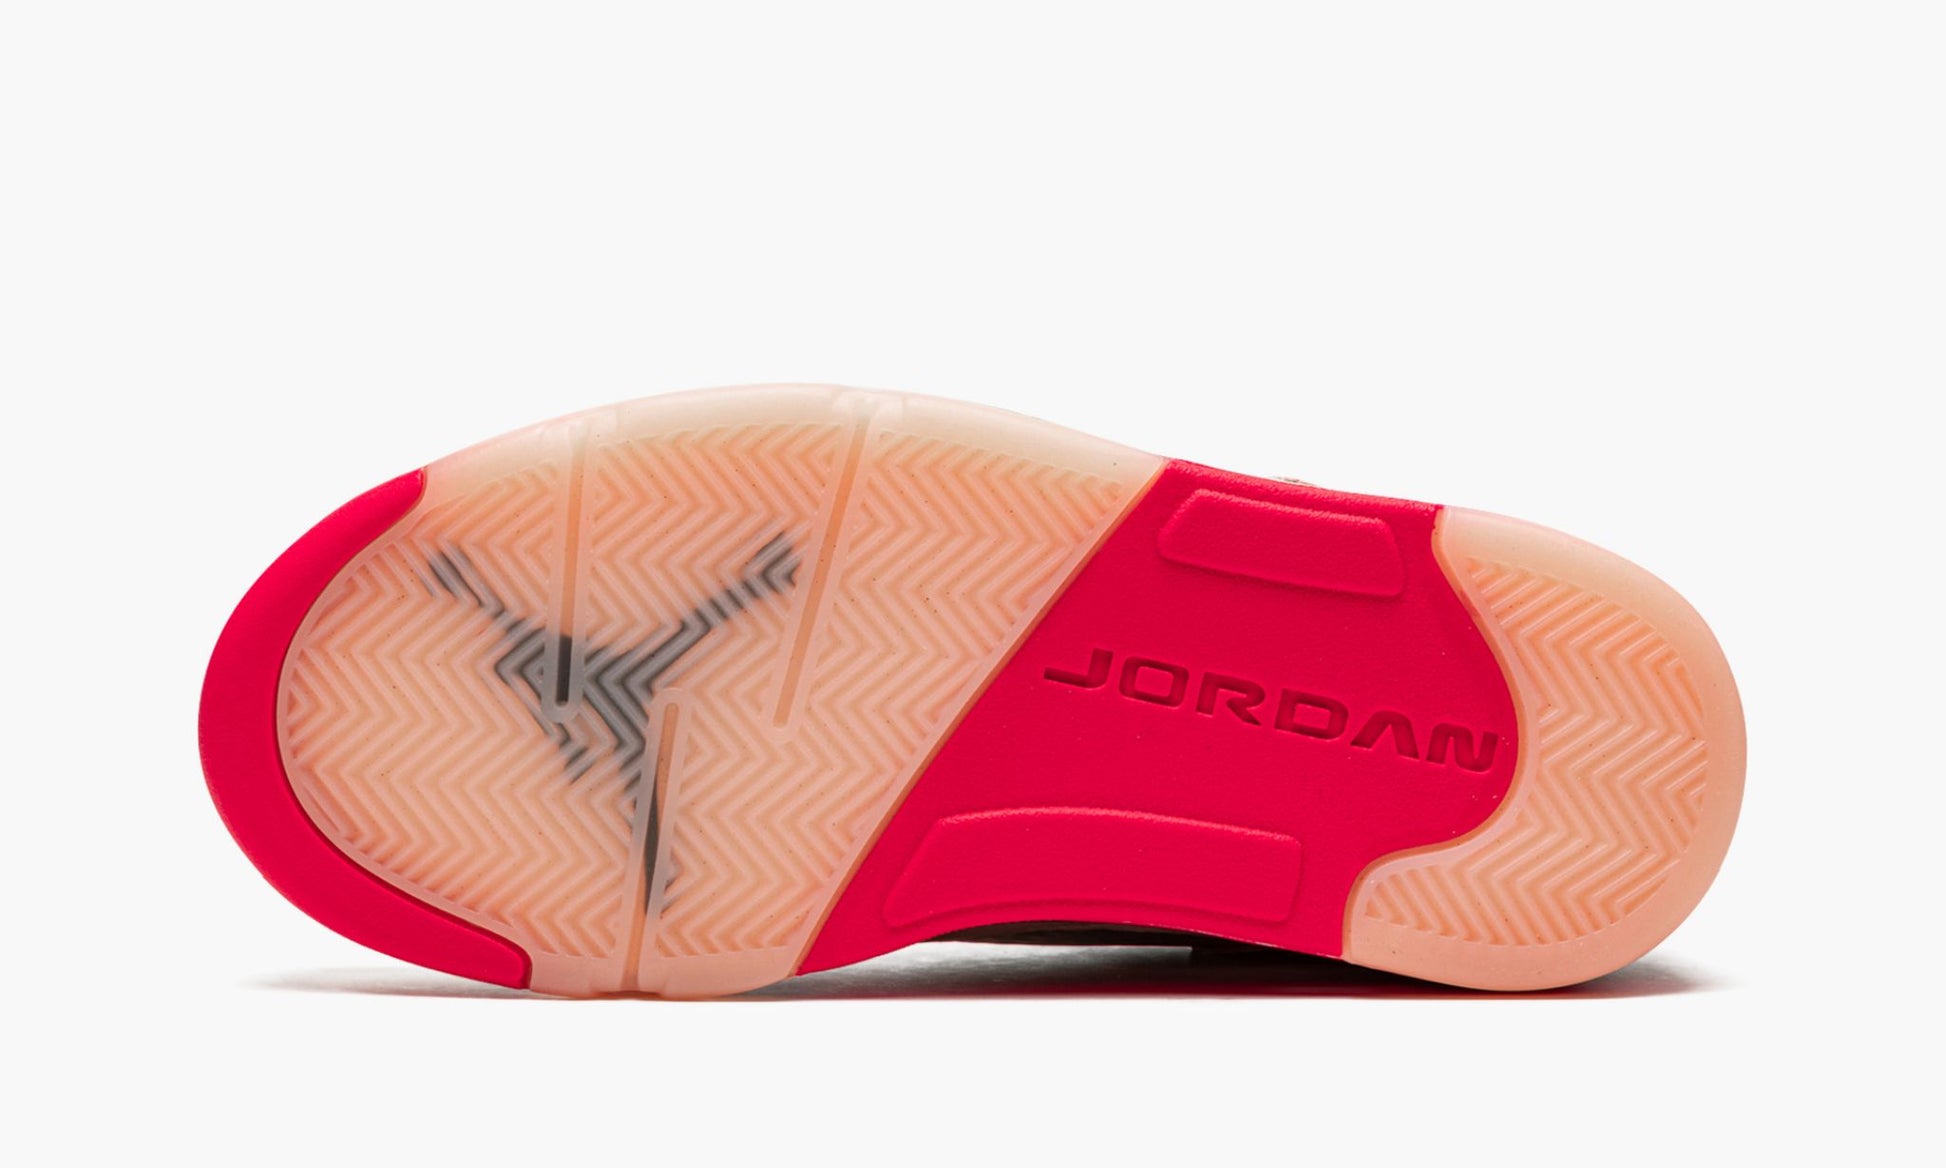 WMNS Air Jordan 5 Low "Arctic Pink"